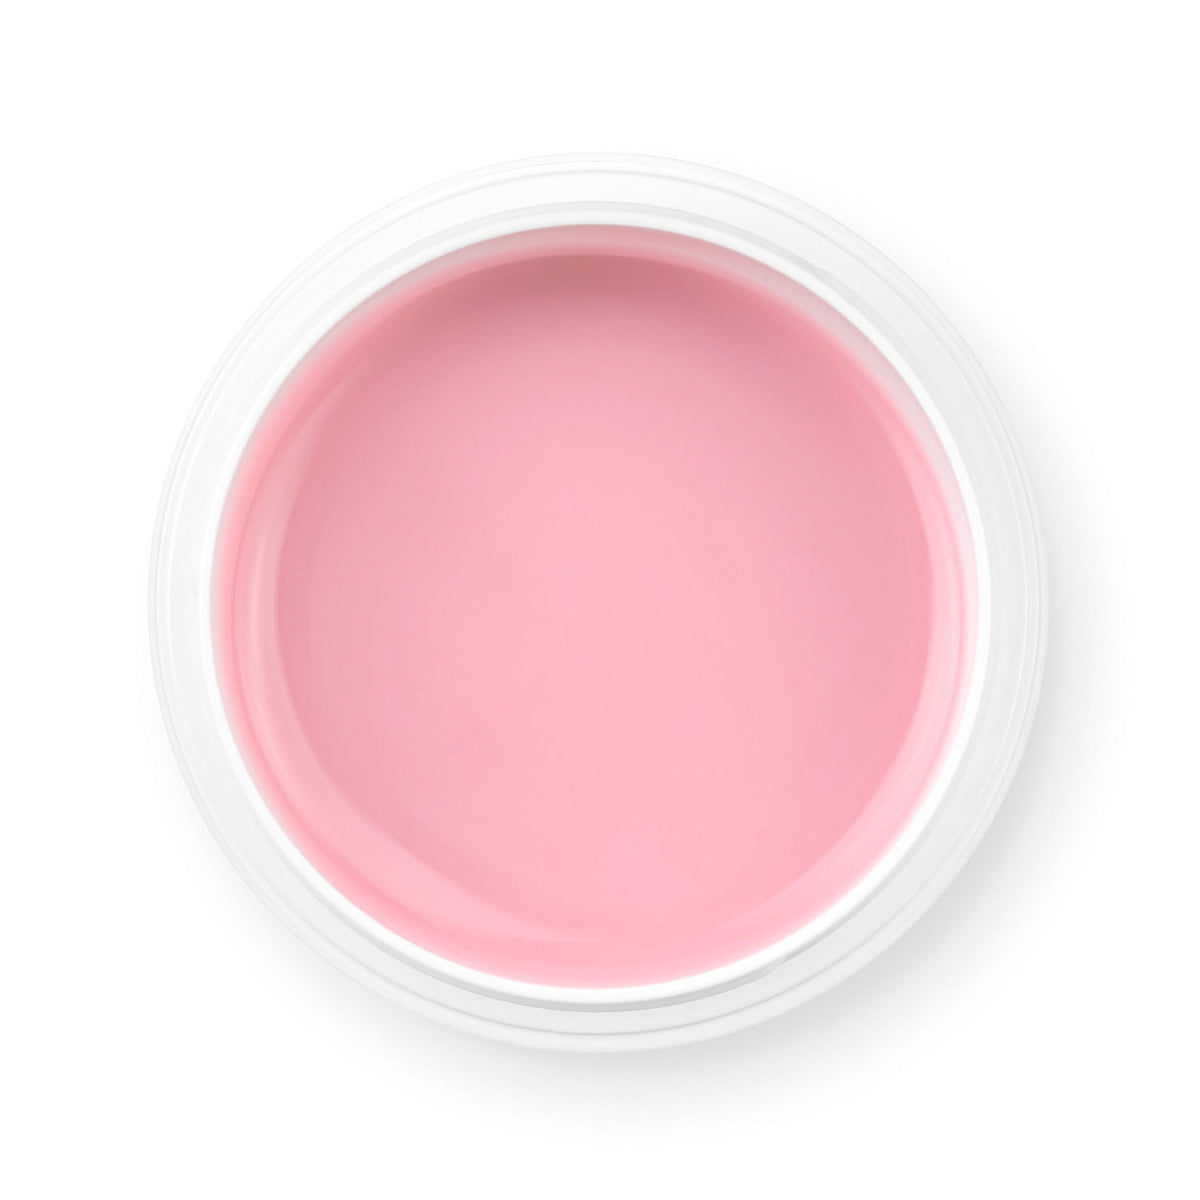 Claresa builder gel Soft & Easy gel milky pink 45g